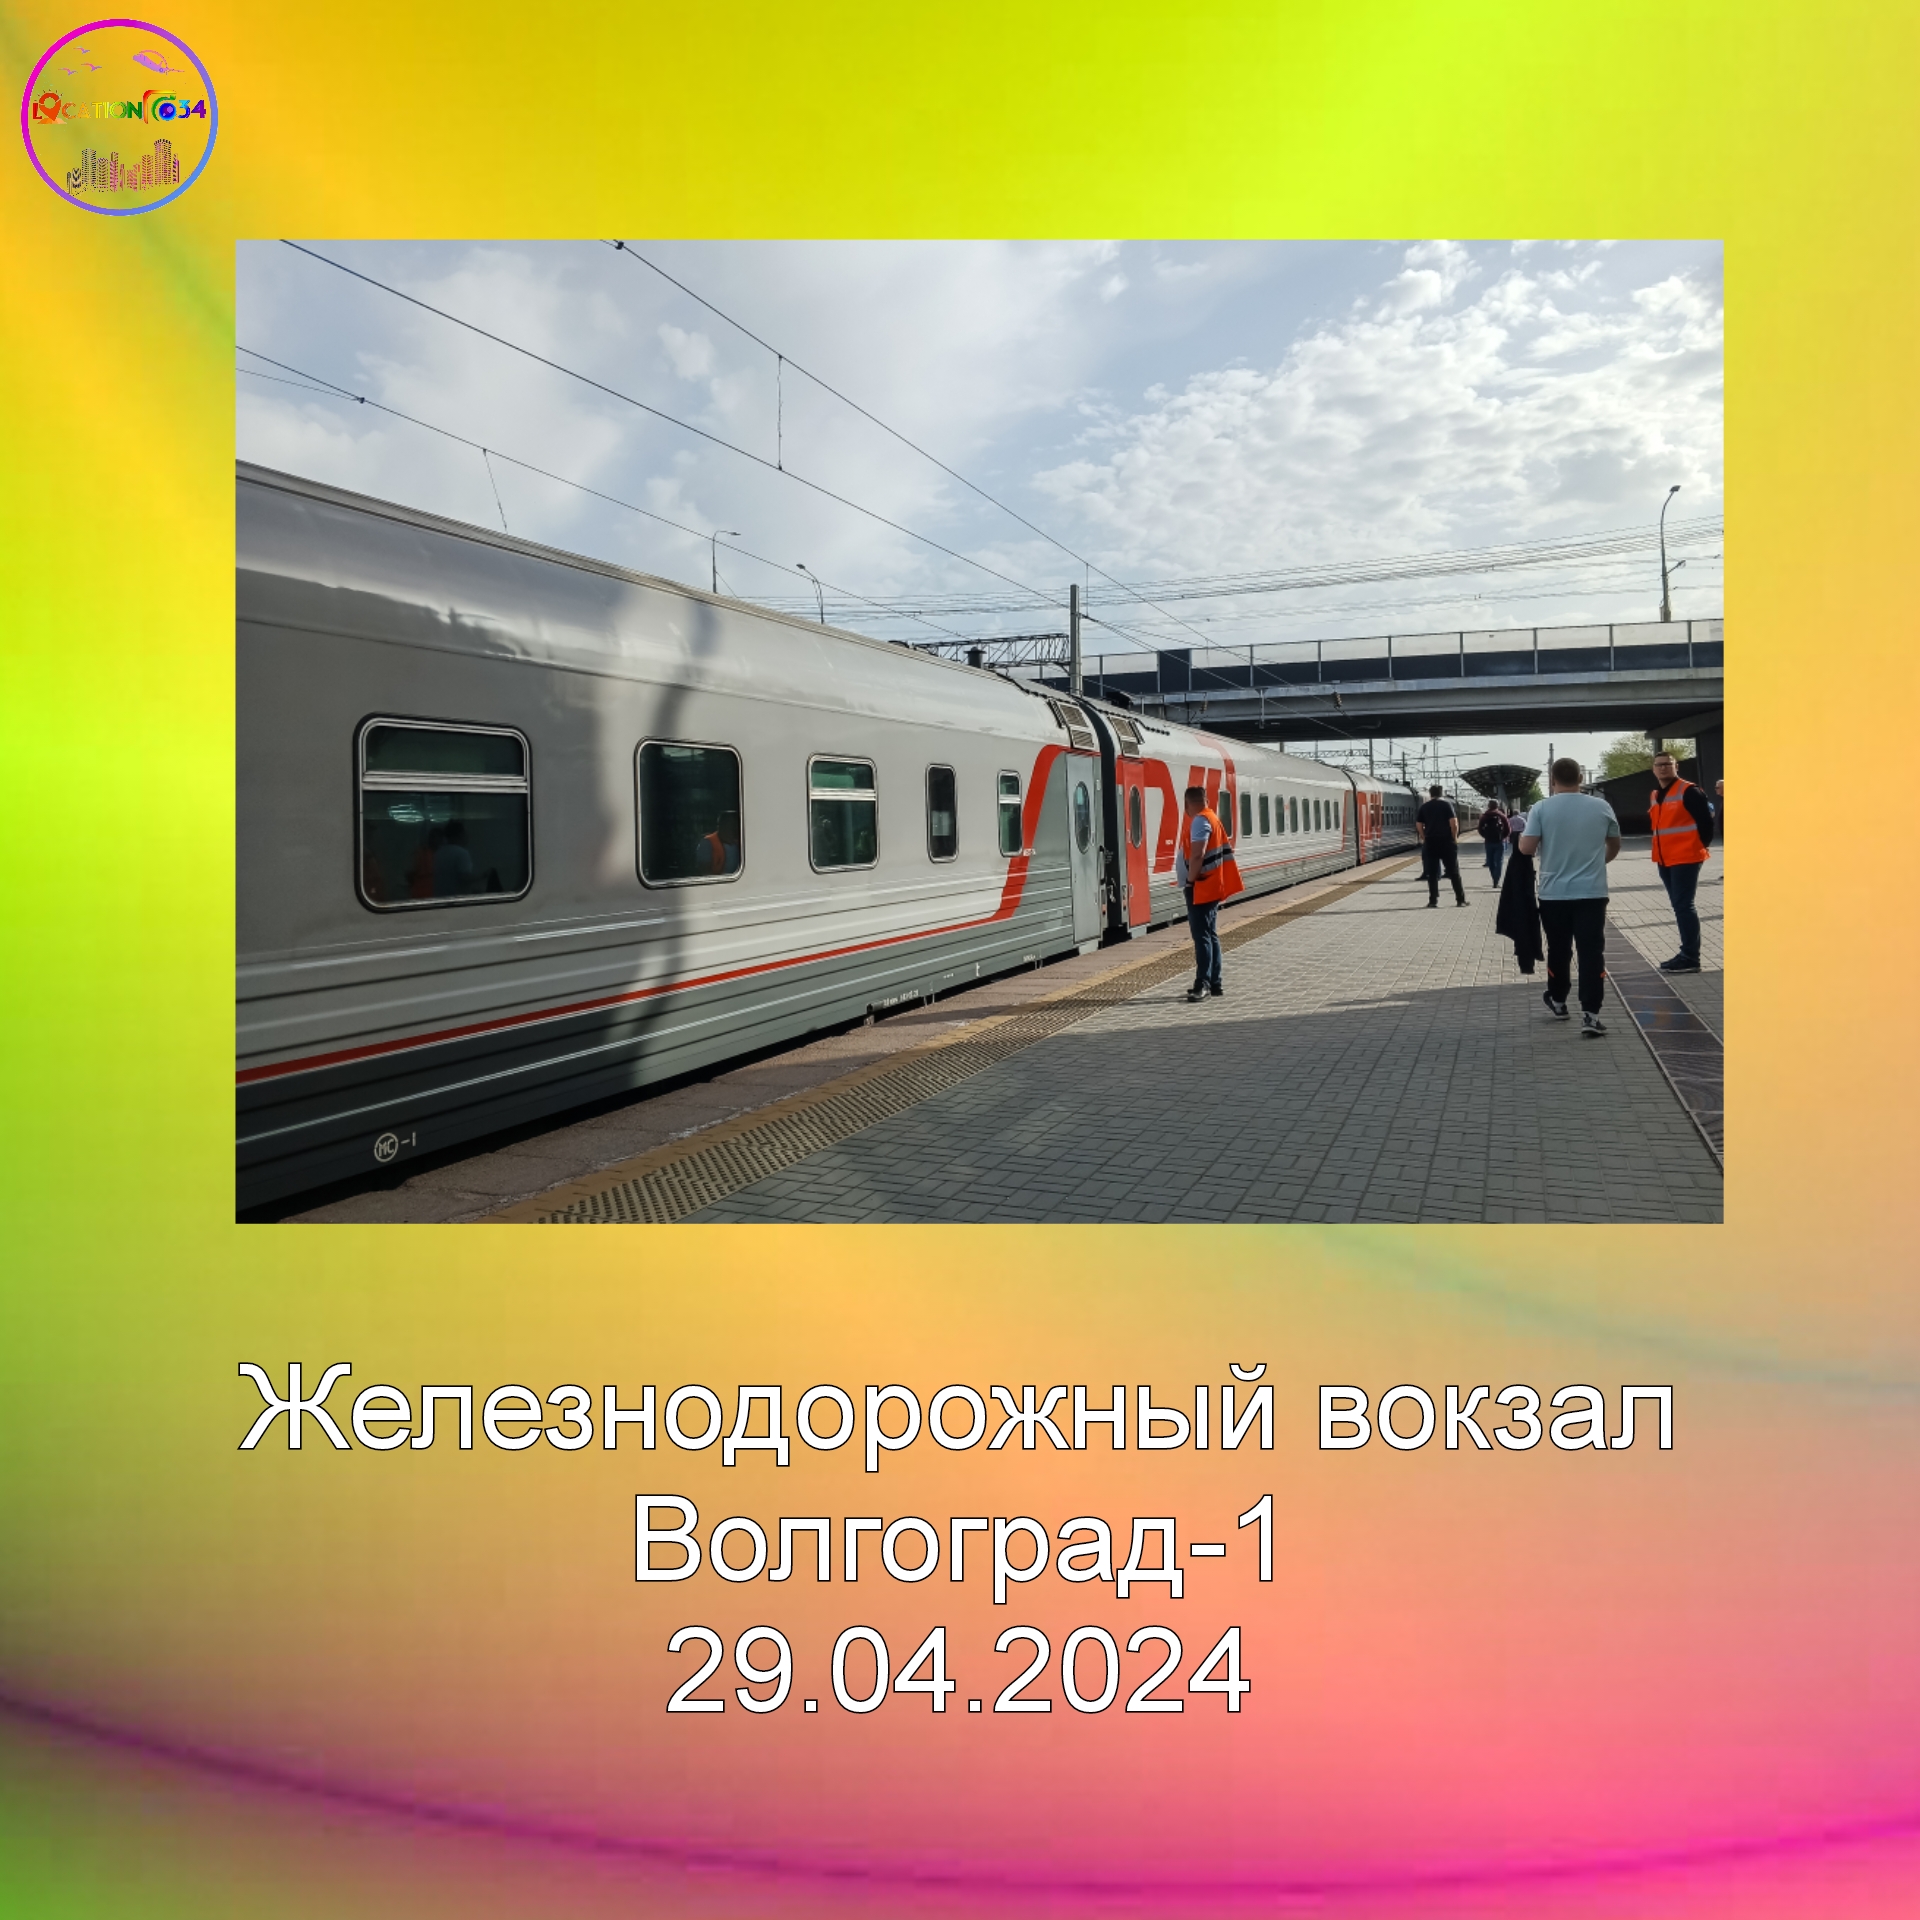 Вокзал-1, Волгоград